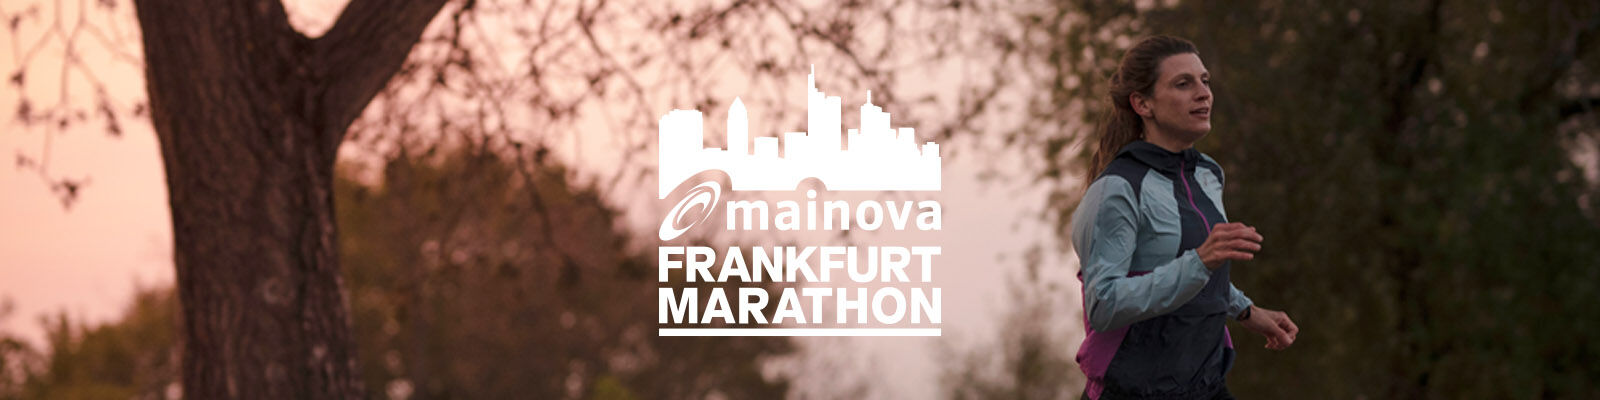 Mainova Frankfurt Marathon | ASICS